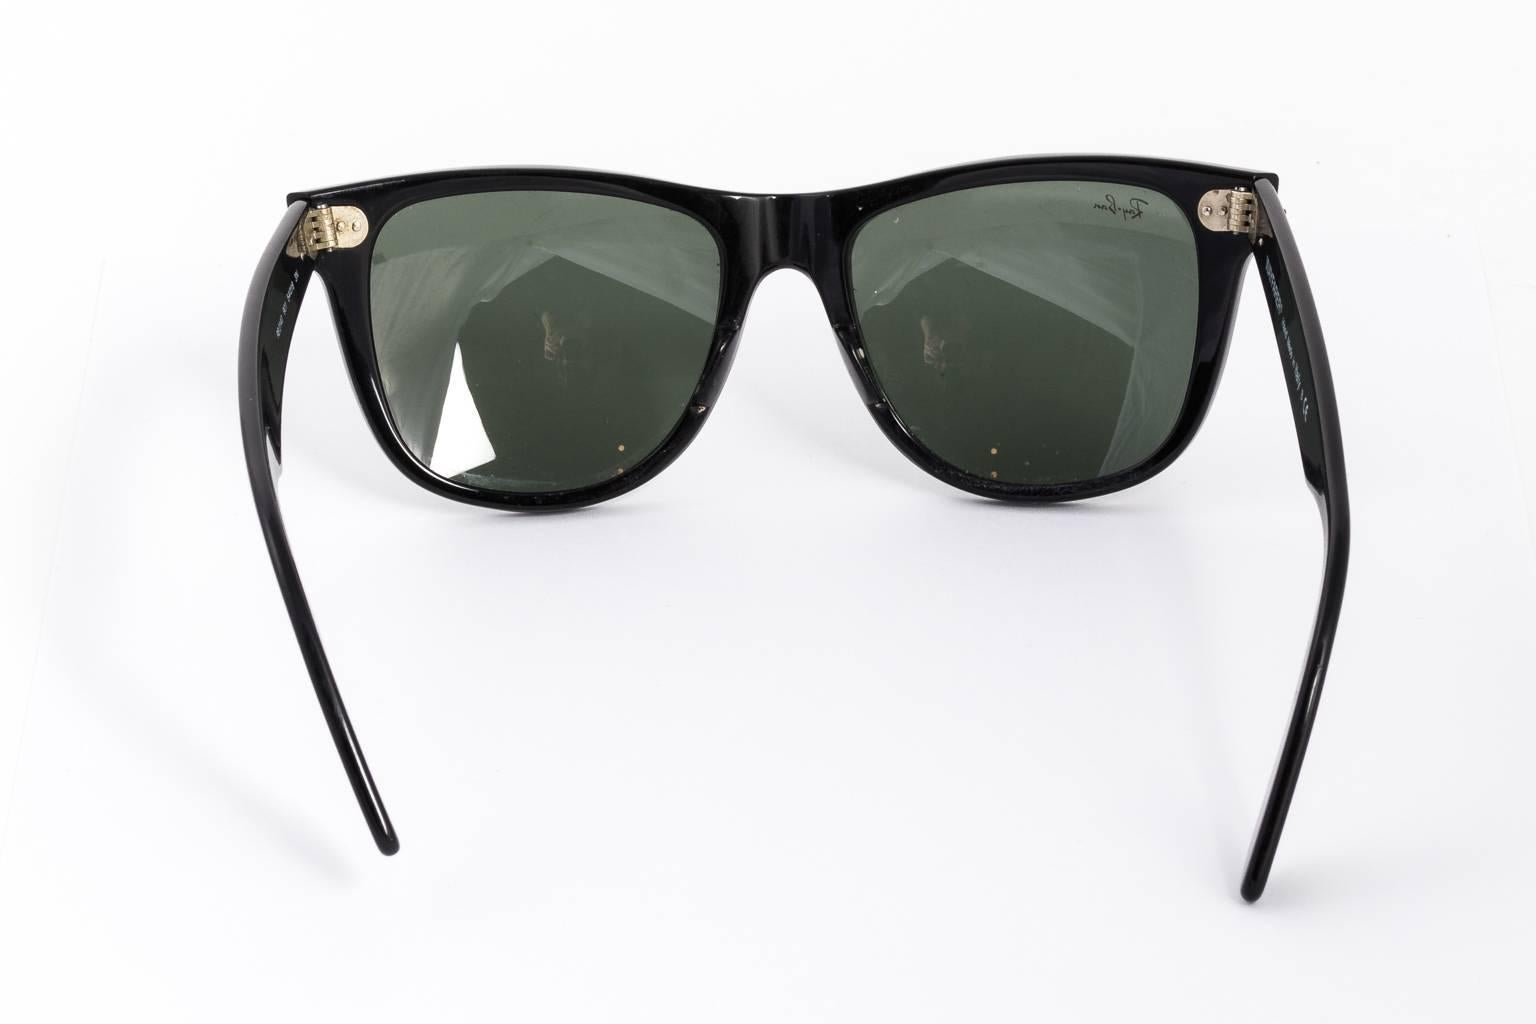  Black Ray-Ban sunglasses 5